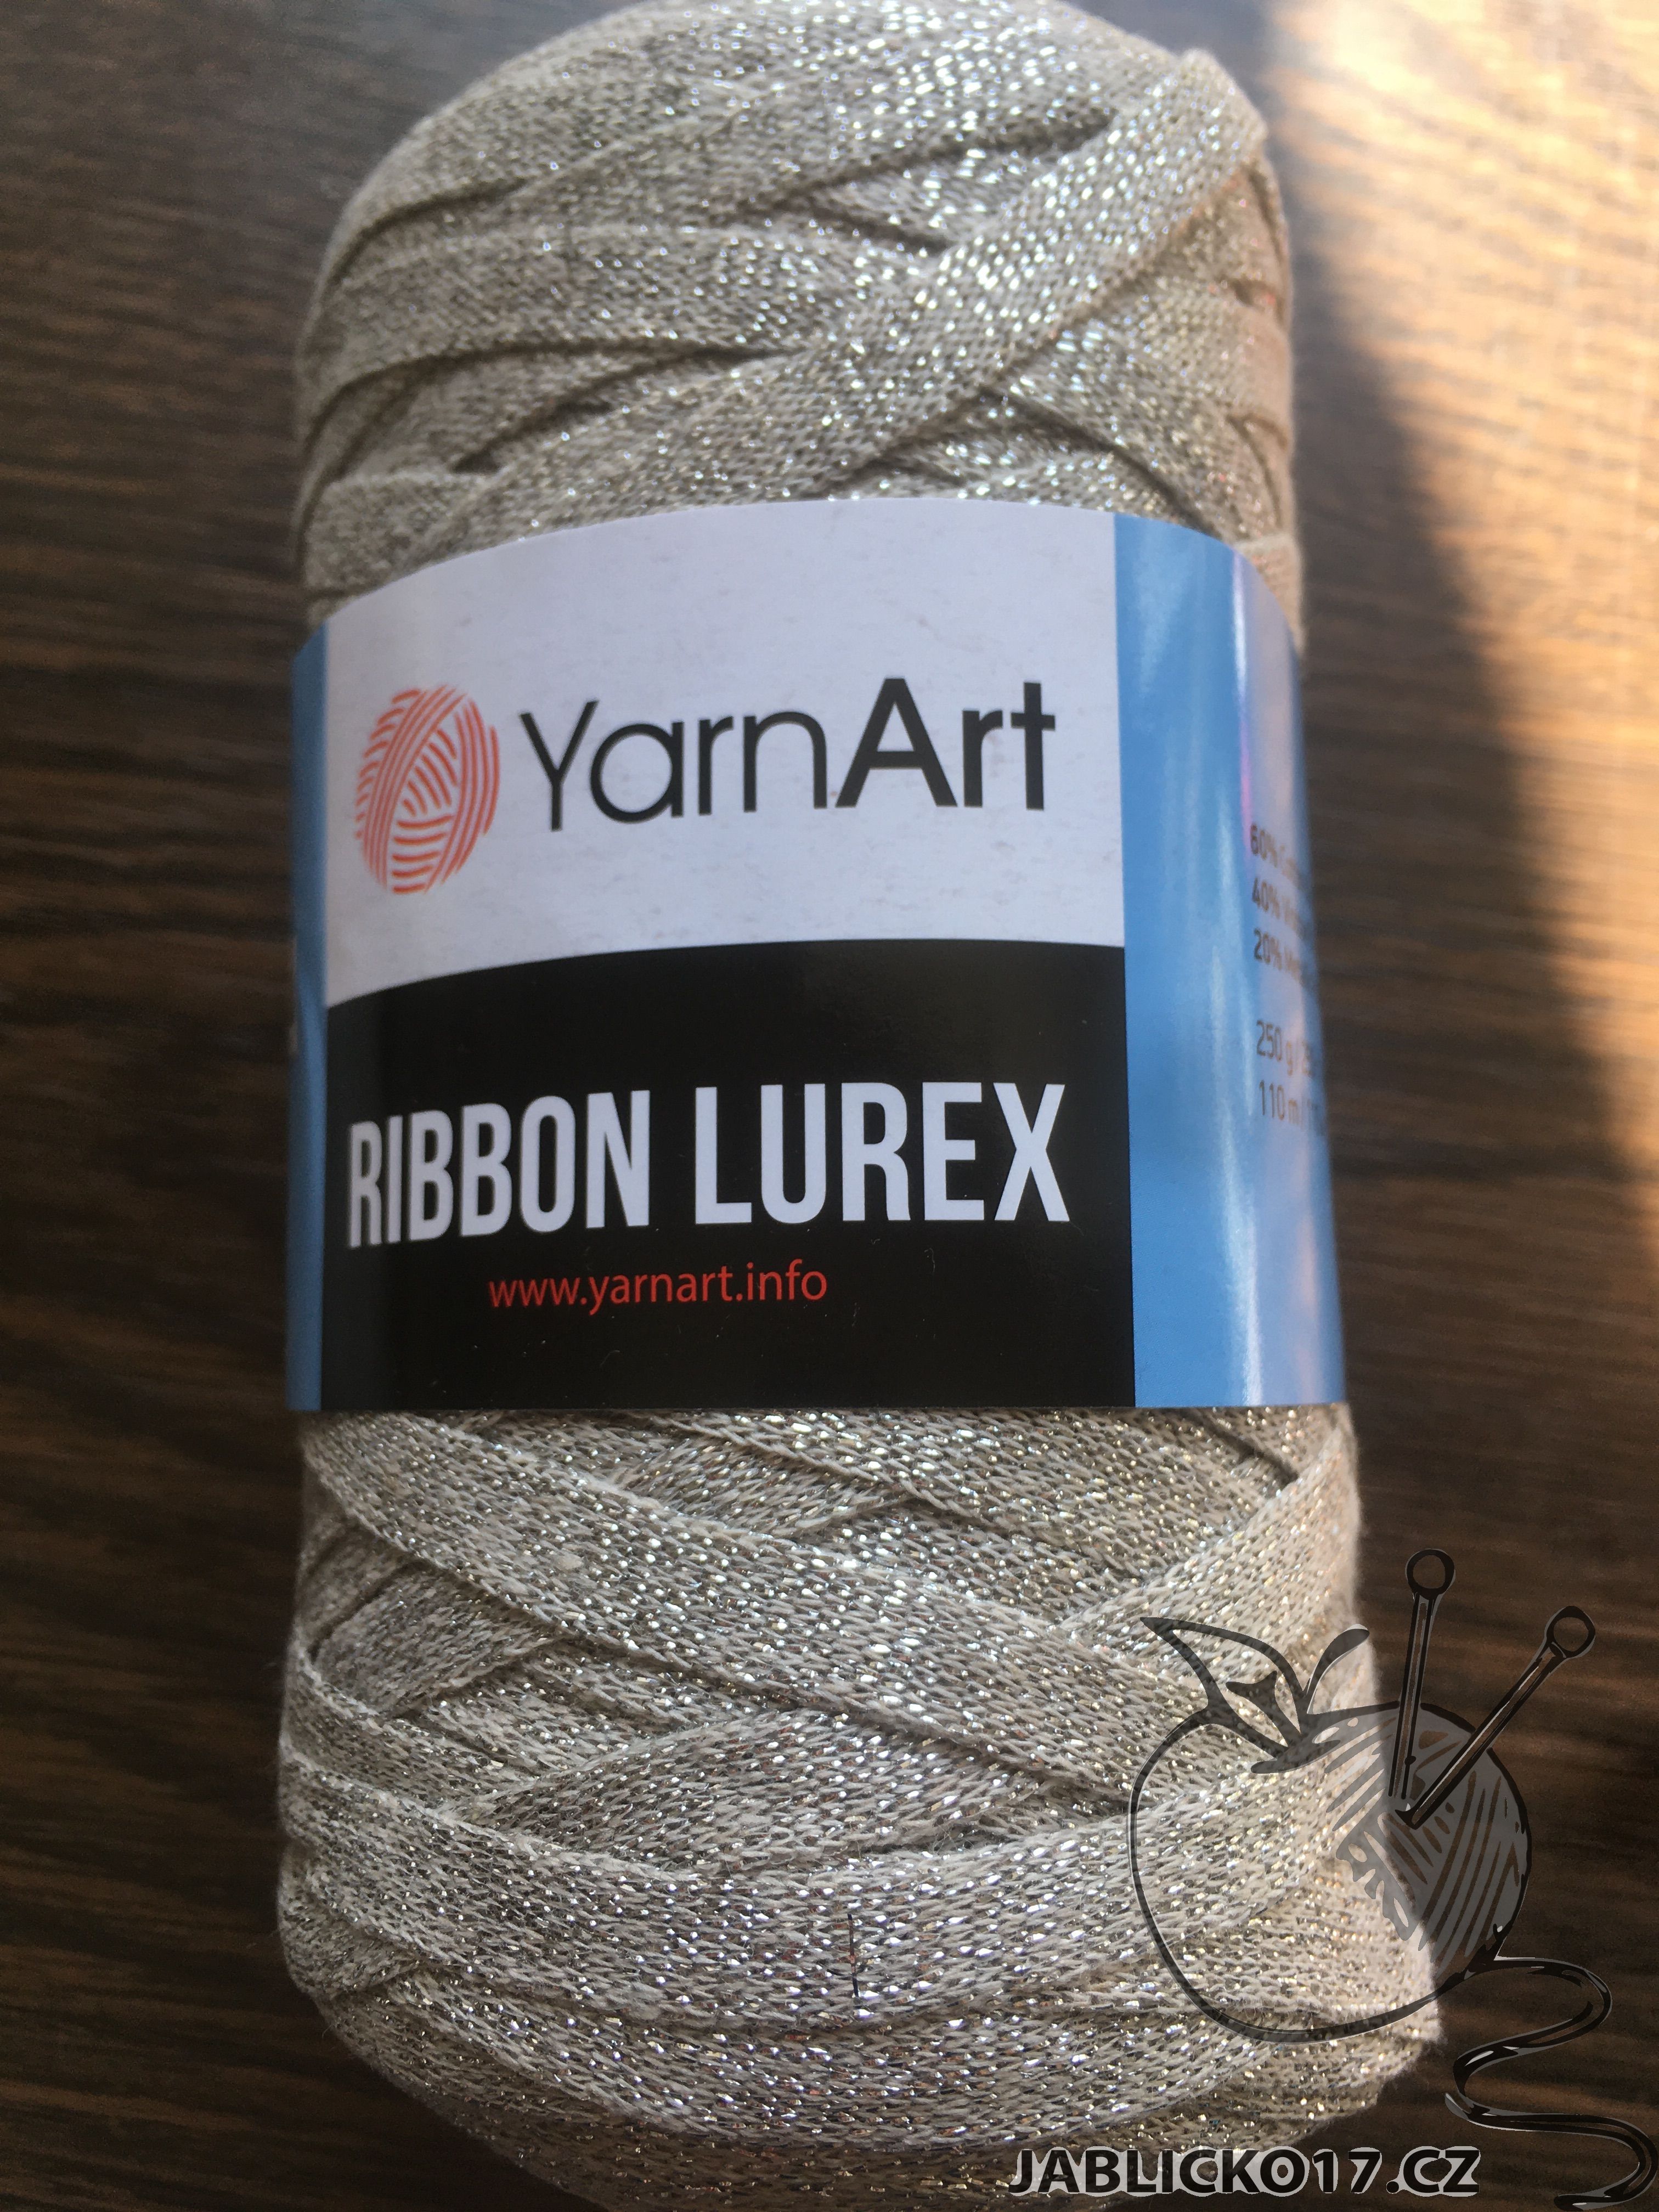 Ribbon lurex smetana